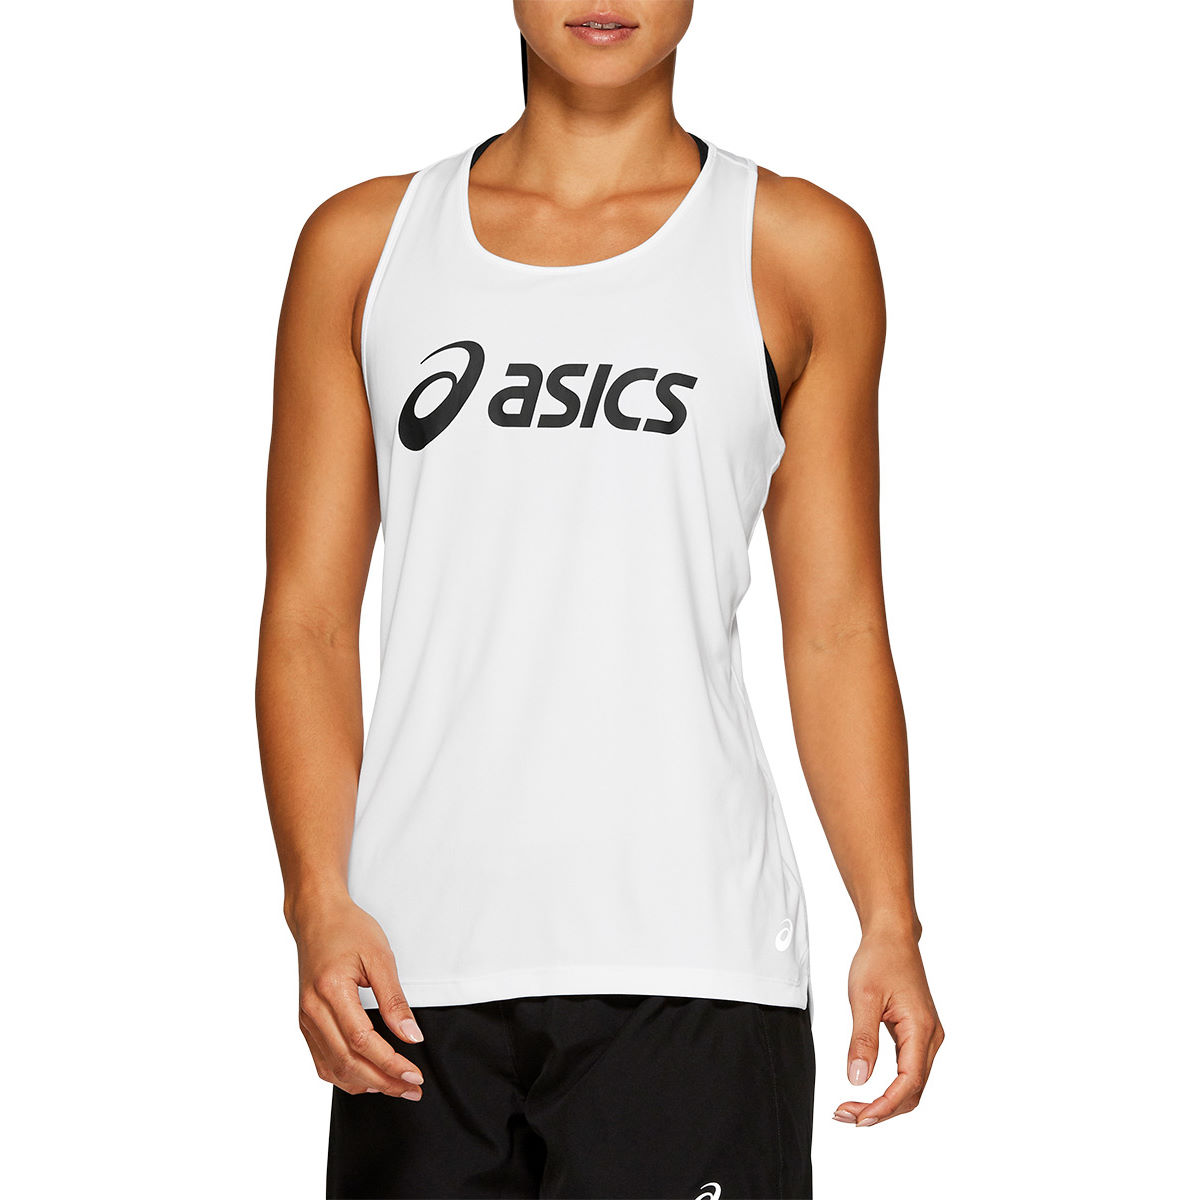 Camiseta de tirantes Asics SILVER ASICS para mujer - Camisetas sin mangas para running